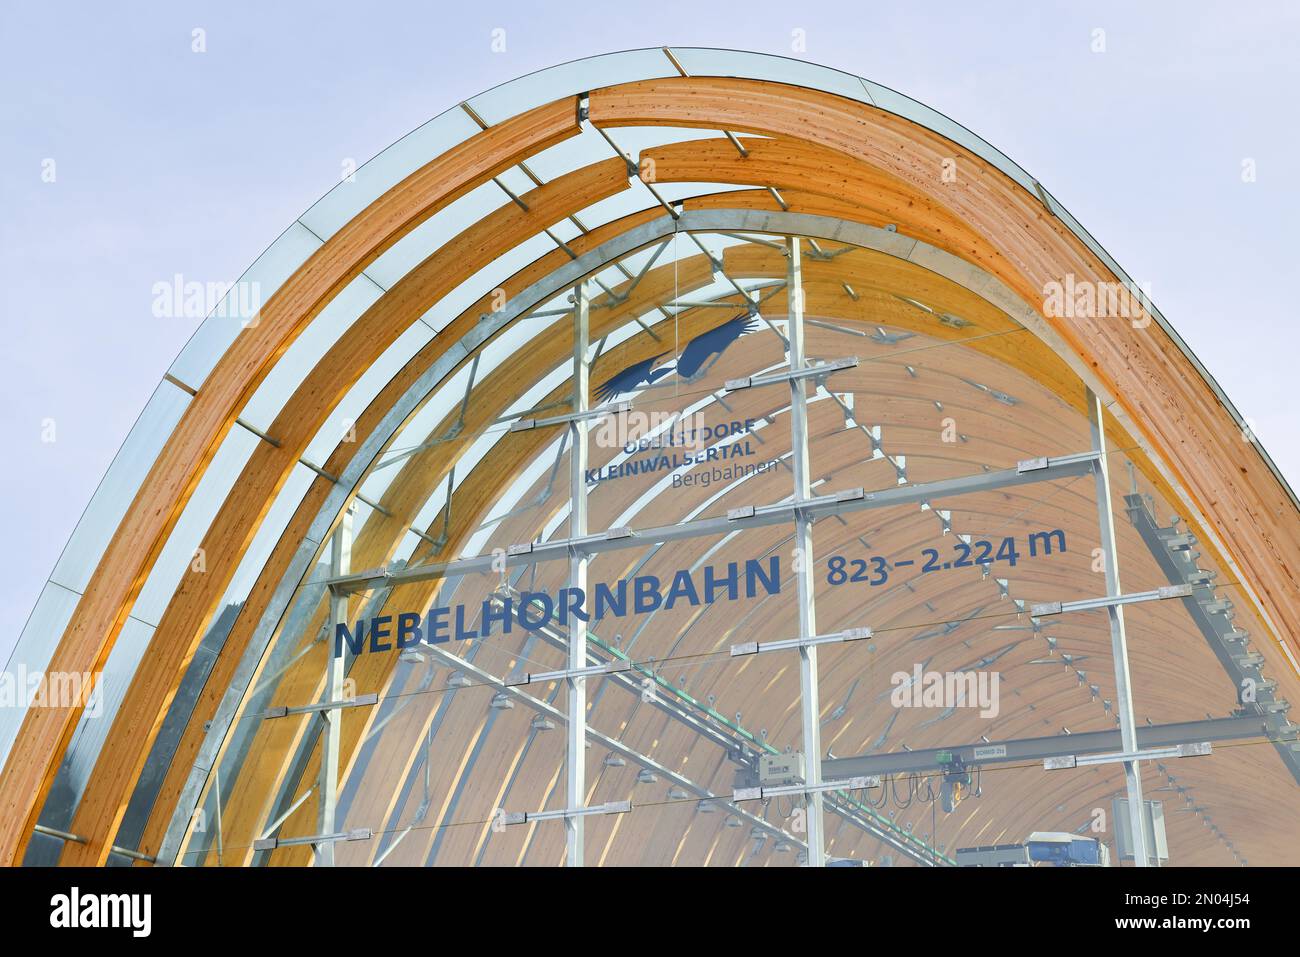 Nebelhornbahn, Nebelhorn Cable Car in Oberstdorf, Bavaria, Germany.  Newly built valley station. Stock Photo